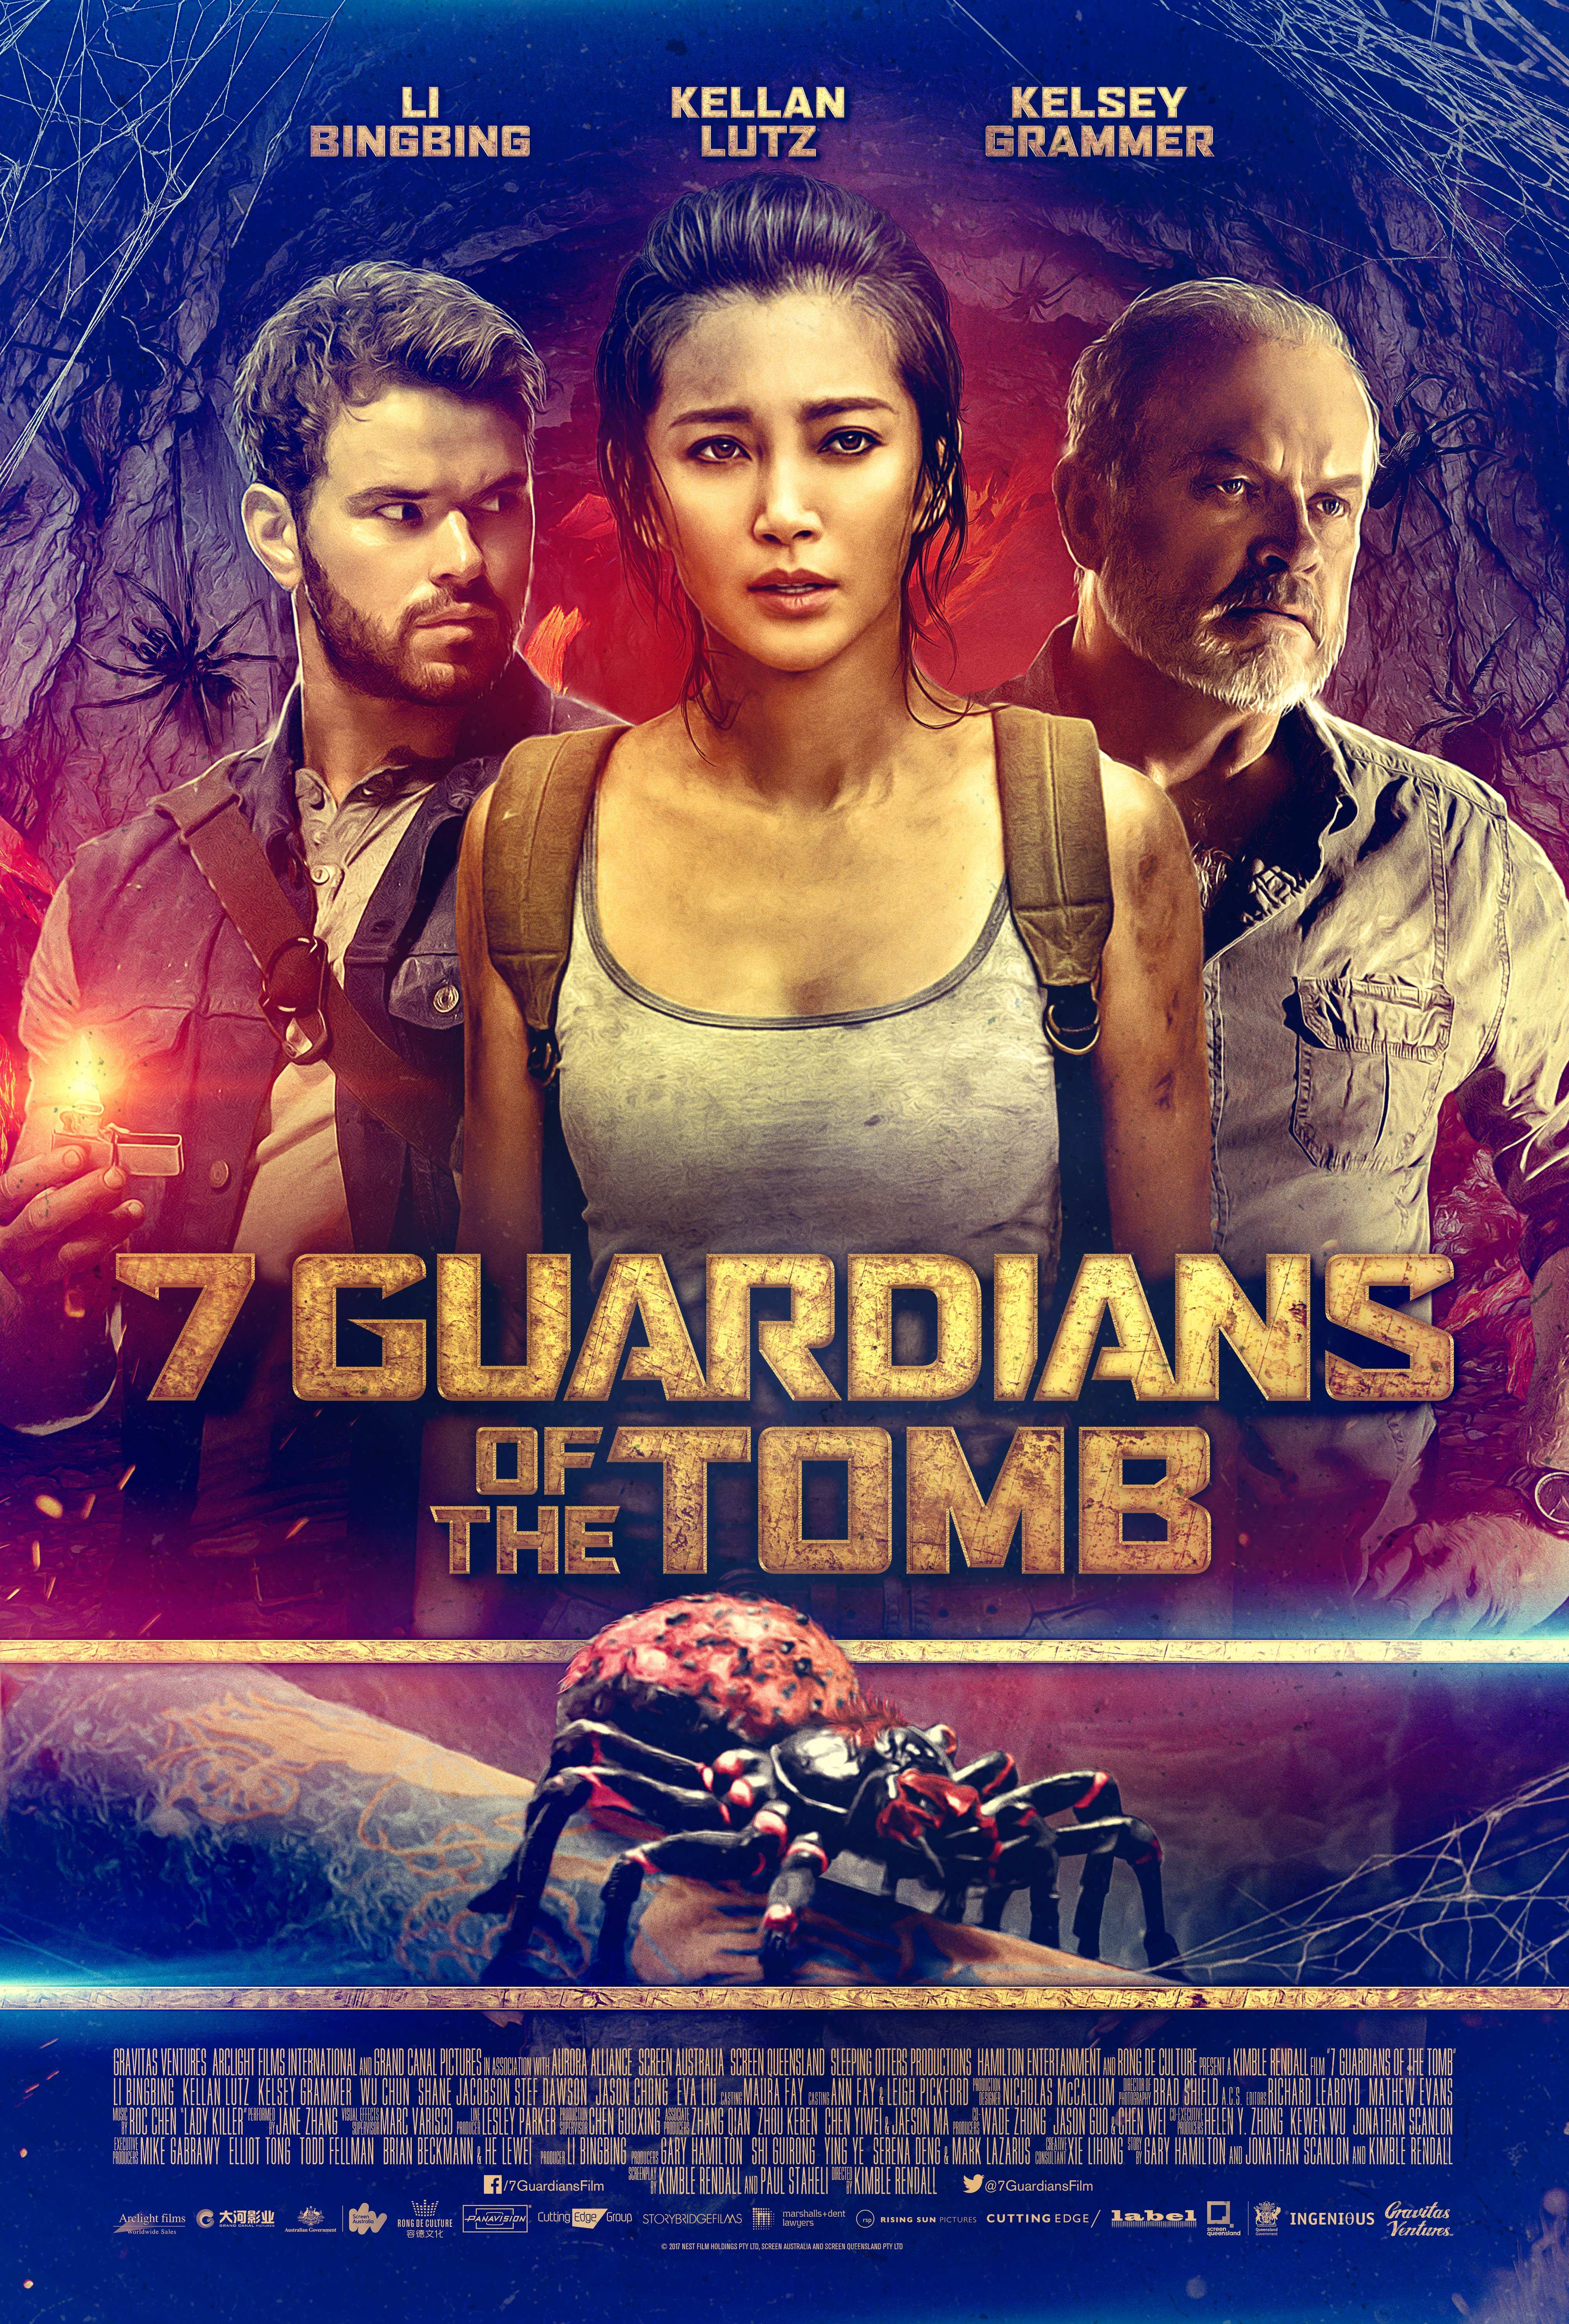 Nonton film Guardians of the Tomb layarkaca21 indoxx1 ganool online streaming terbaru